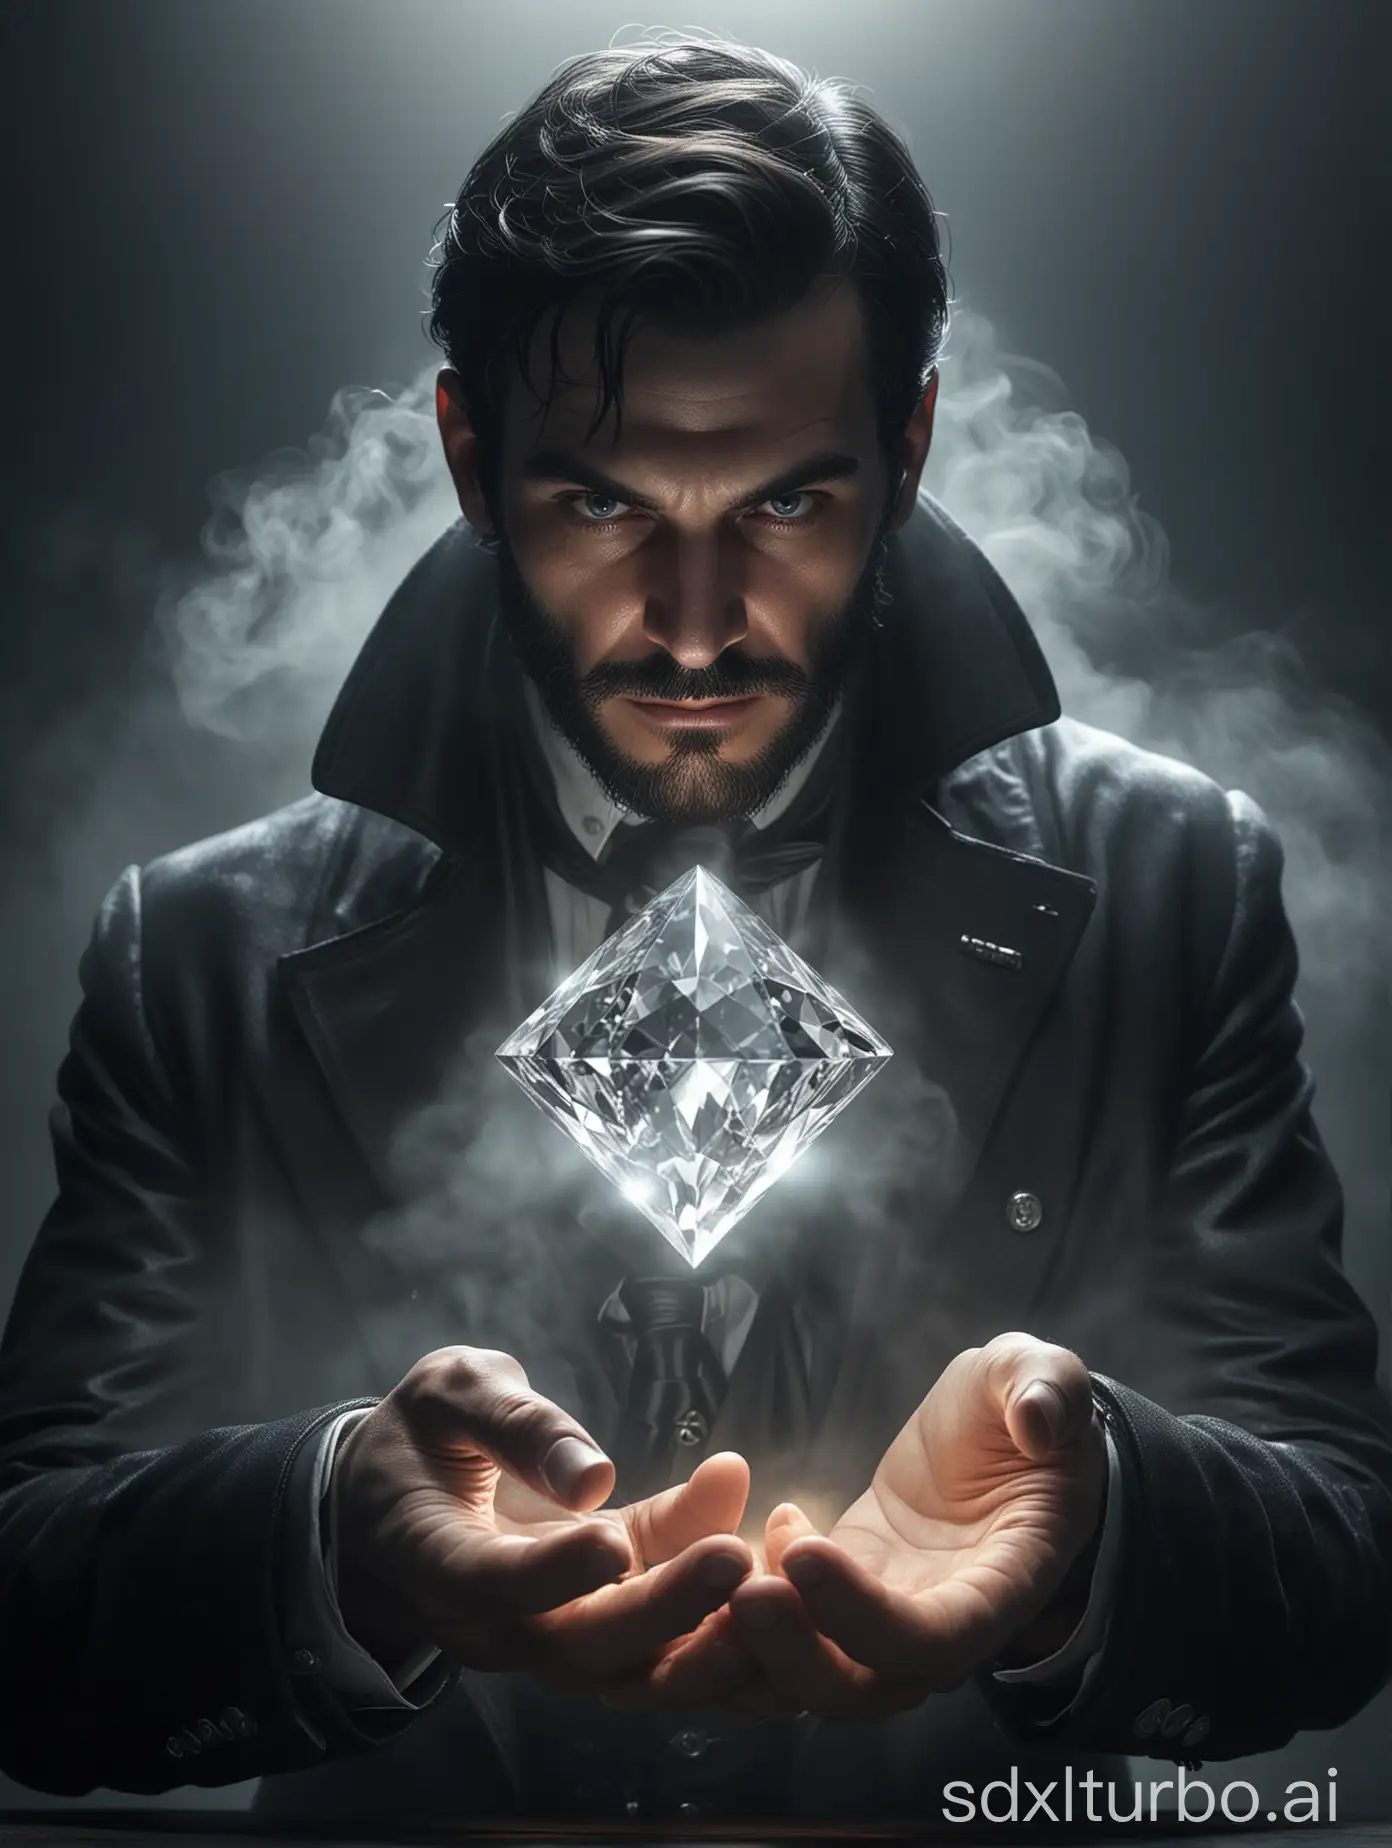 French-Gentleman-Thief-Holding-Glowing-Diamond-in-Heavy-Fog